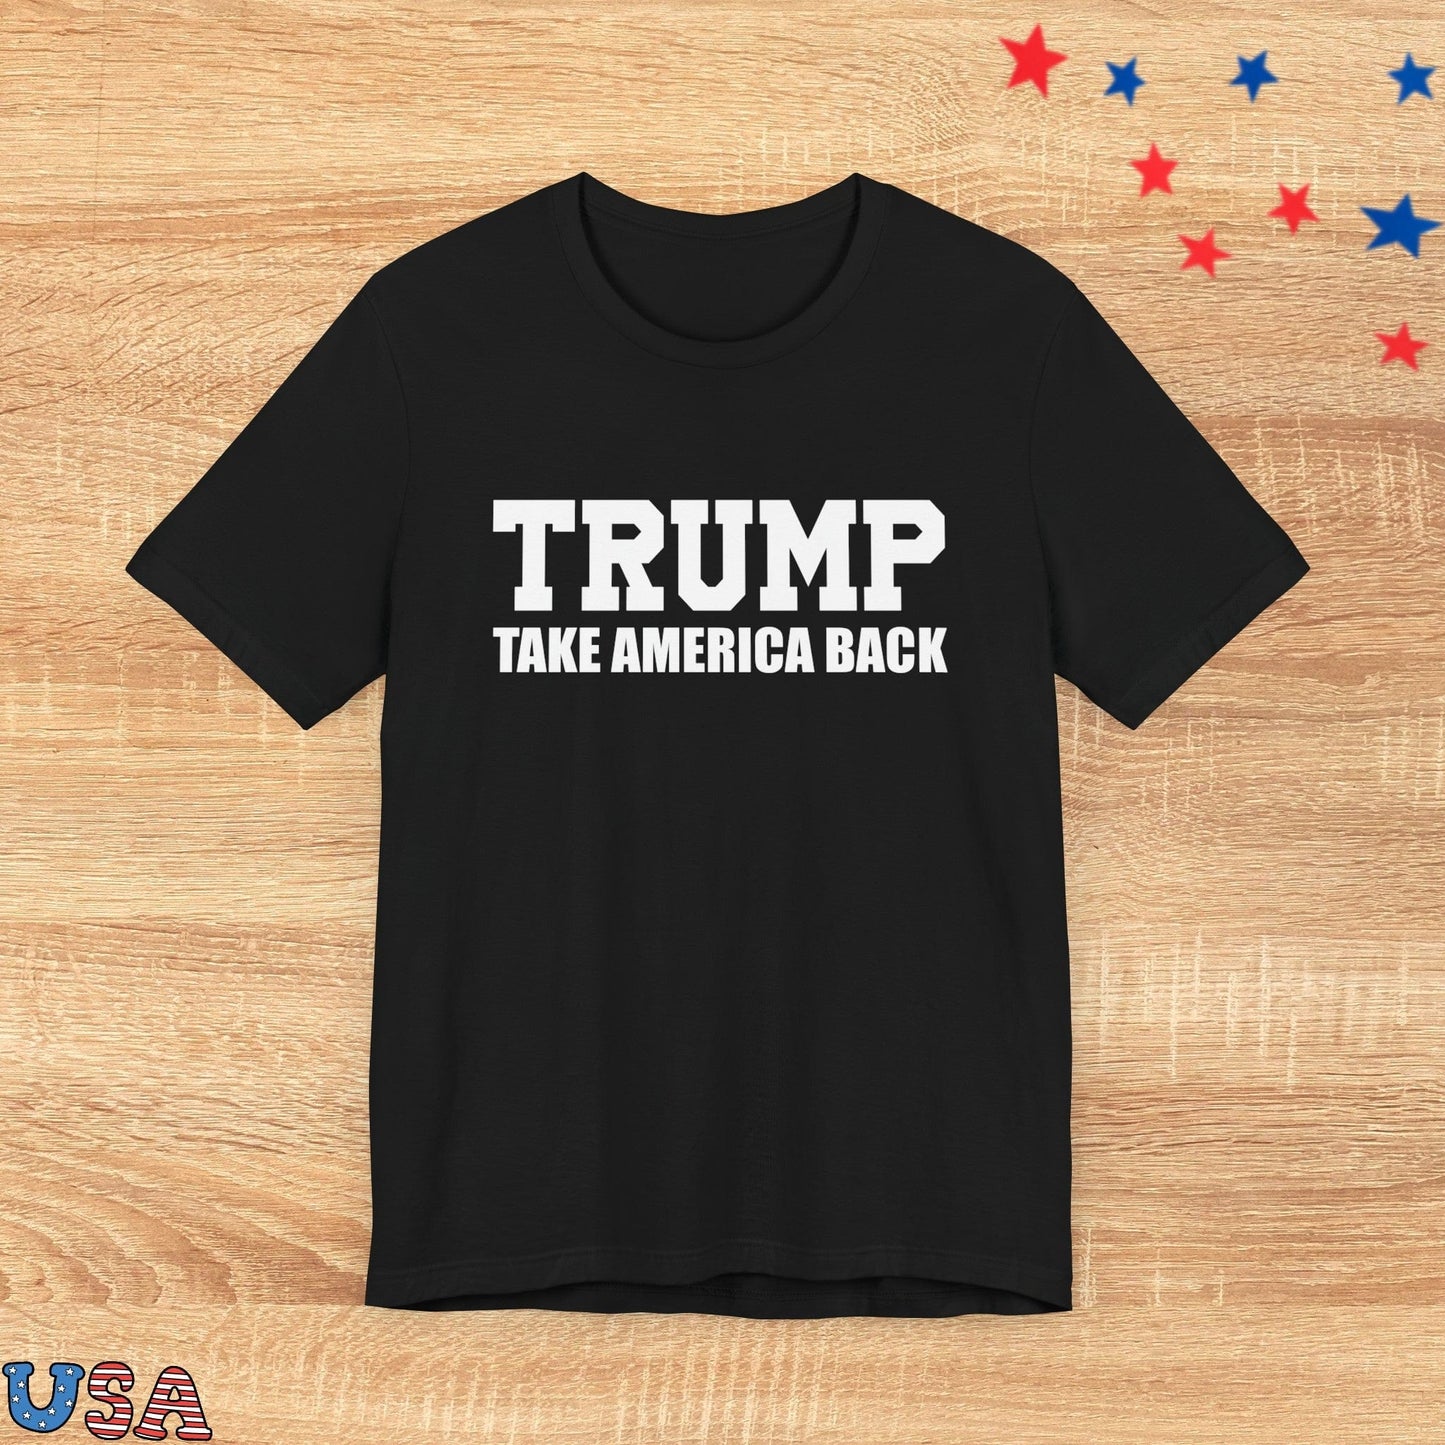 patriotic stars T-Shirt Black / XS Trump Take America Back